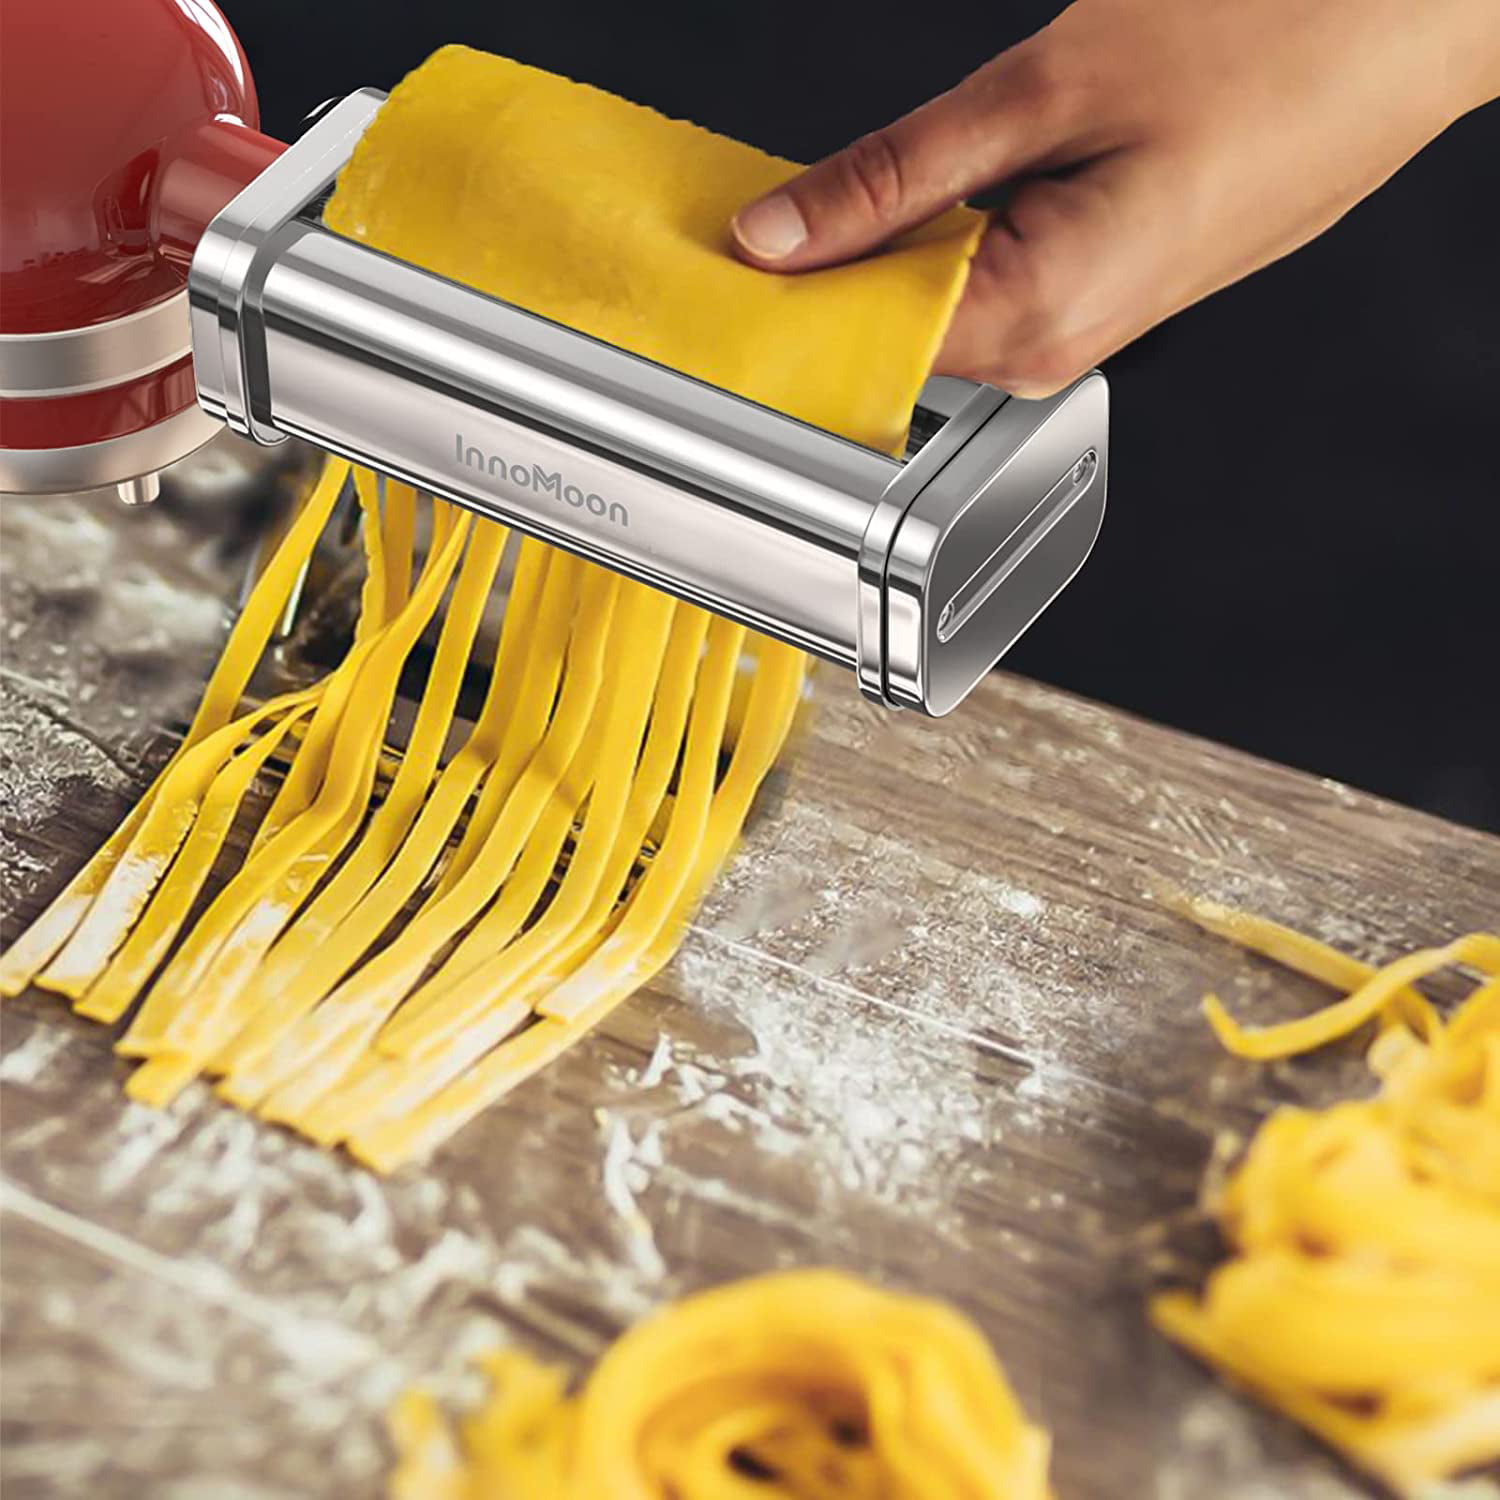 HOMGEN Original Pasta Attachment for Kitchenaid Stand Mixer 8 Thickness  Adjustable Pasta Maker Attachment for Kitchenaid Washable 3in1 Pasta